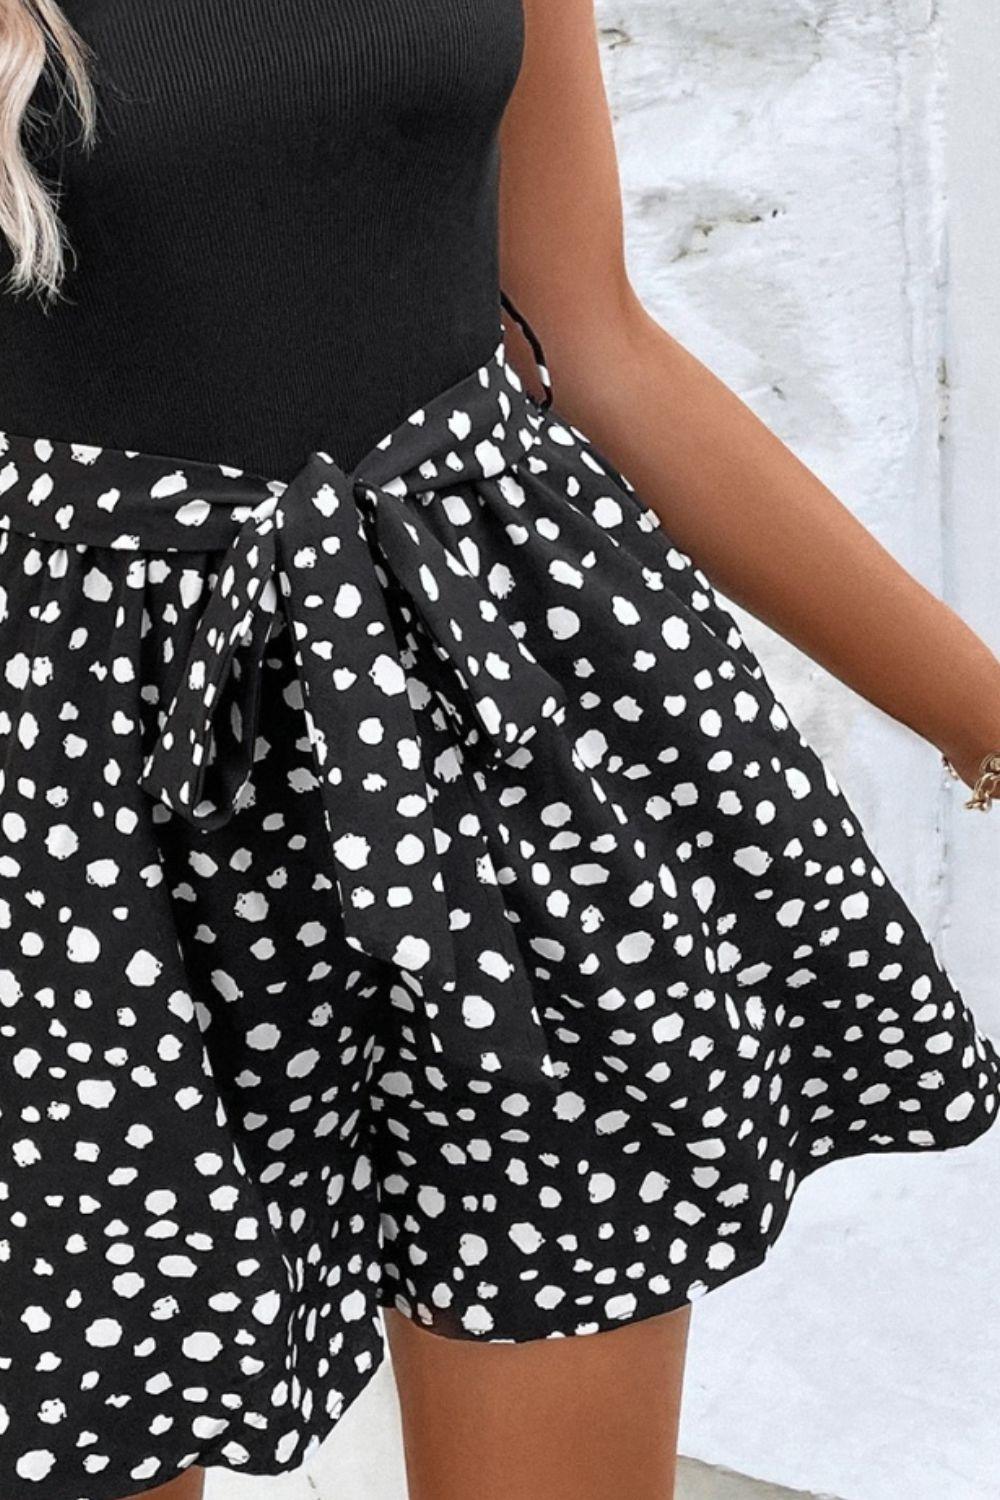 a woman wearing a black and white polka dot skirt